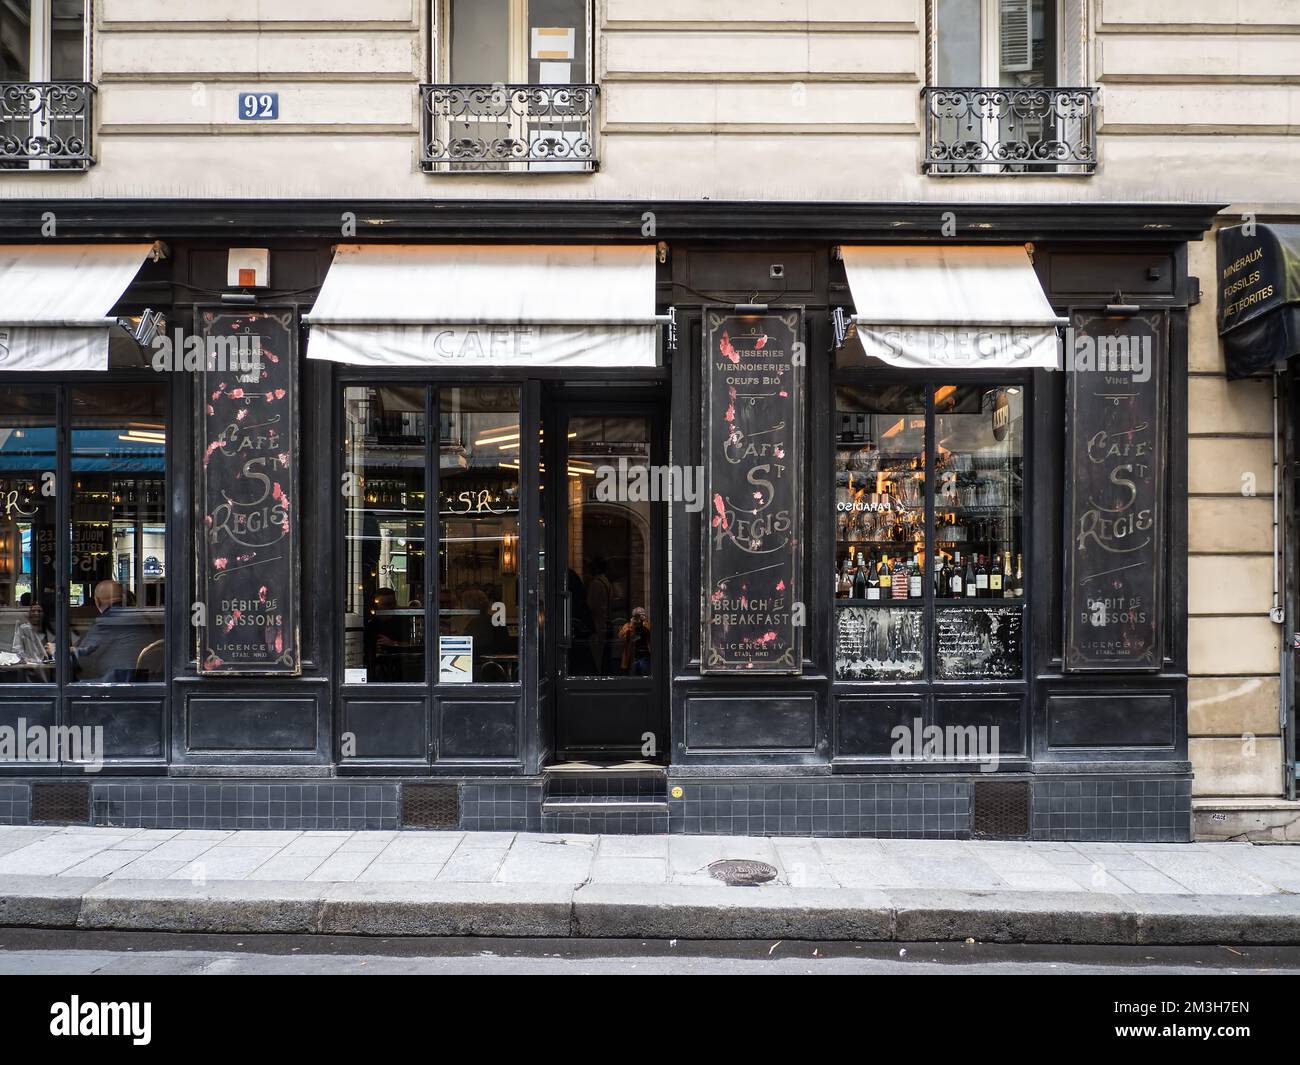 Café St Regis, París, Francia Foto de stock